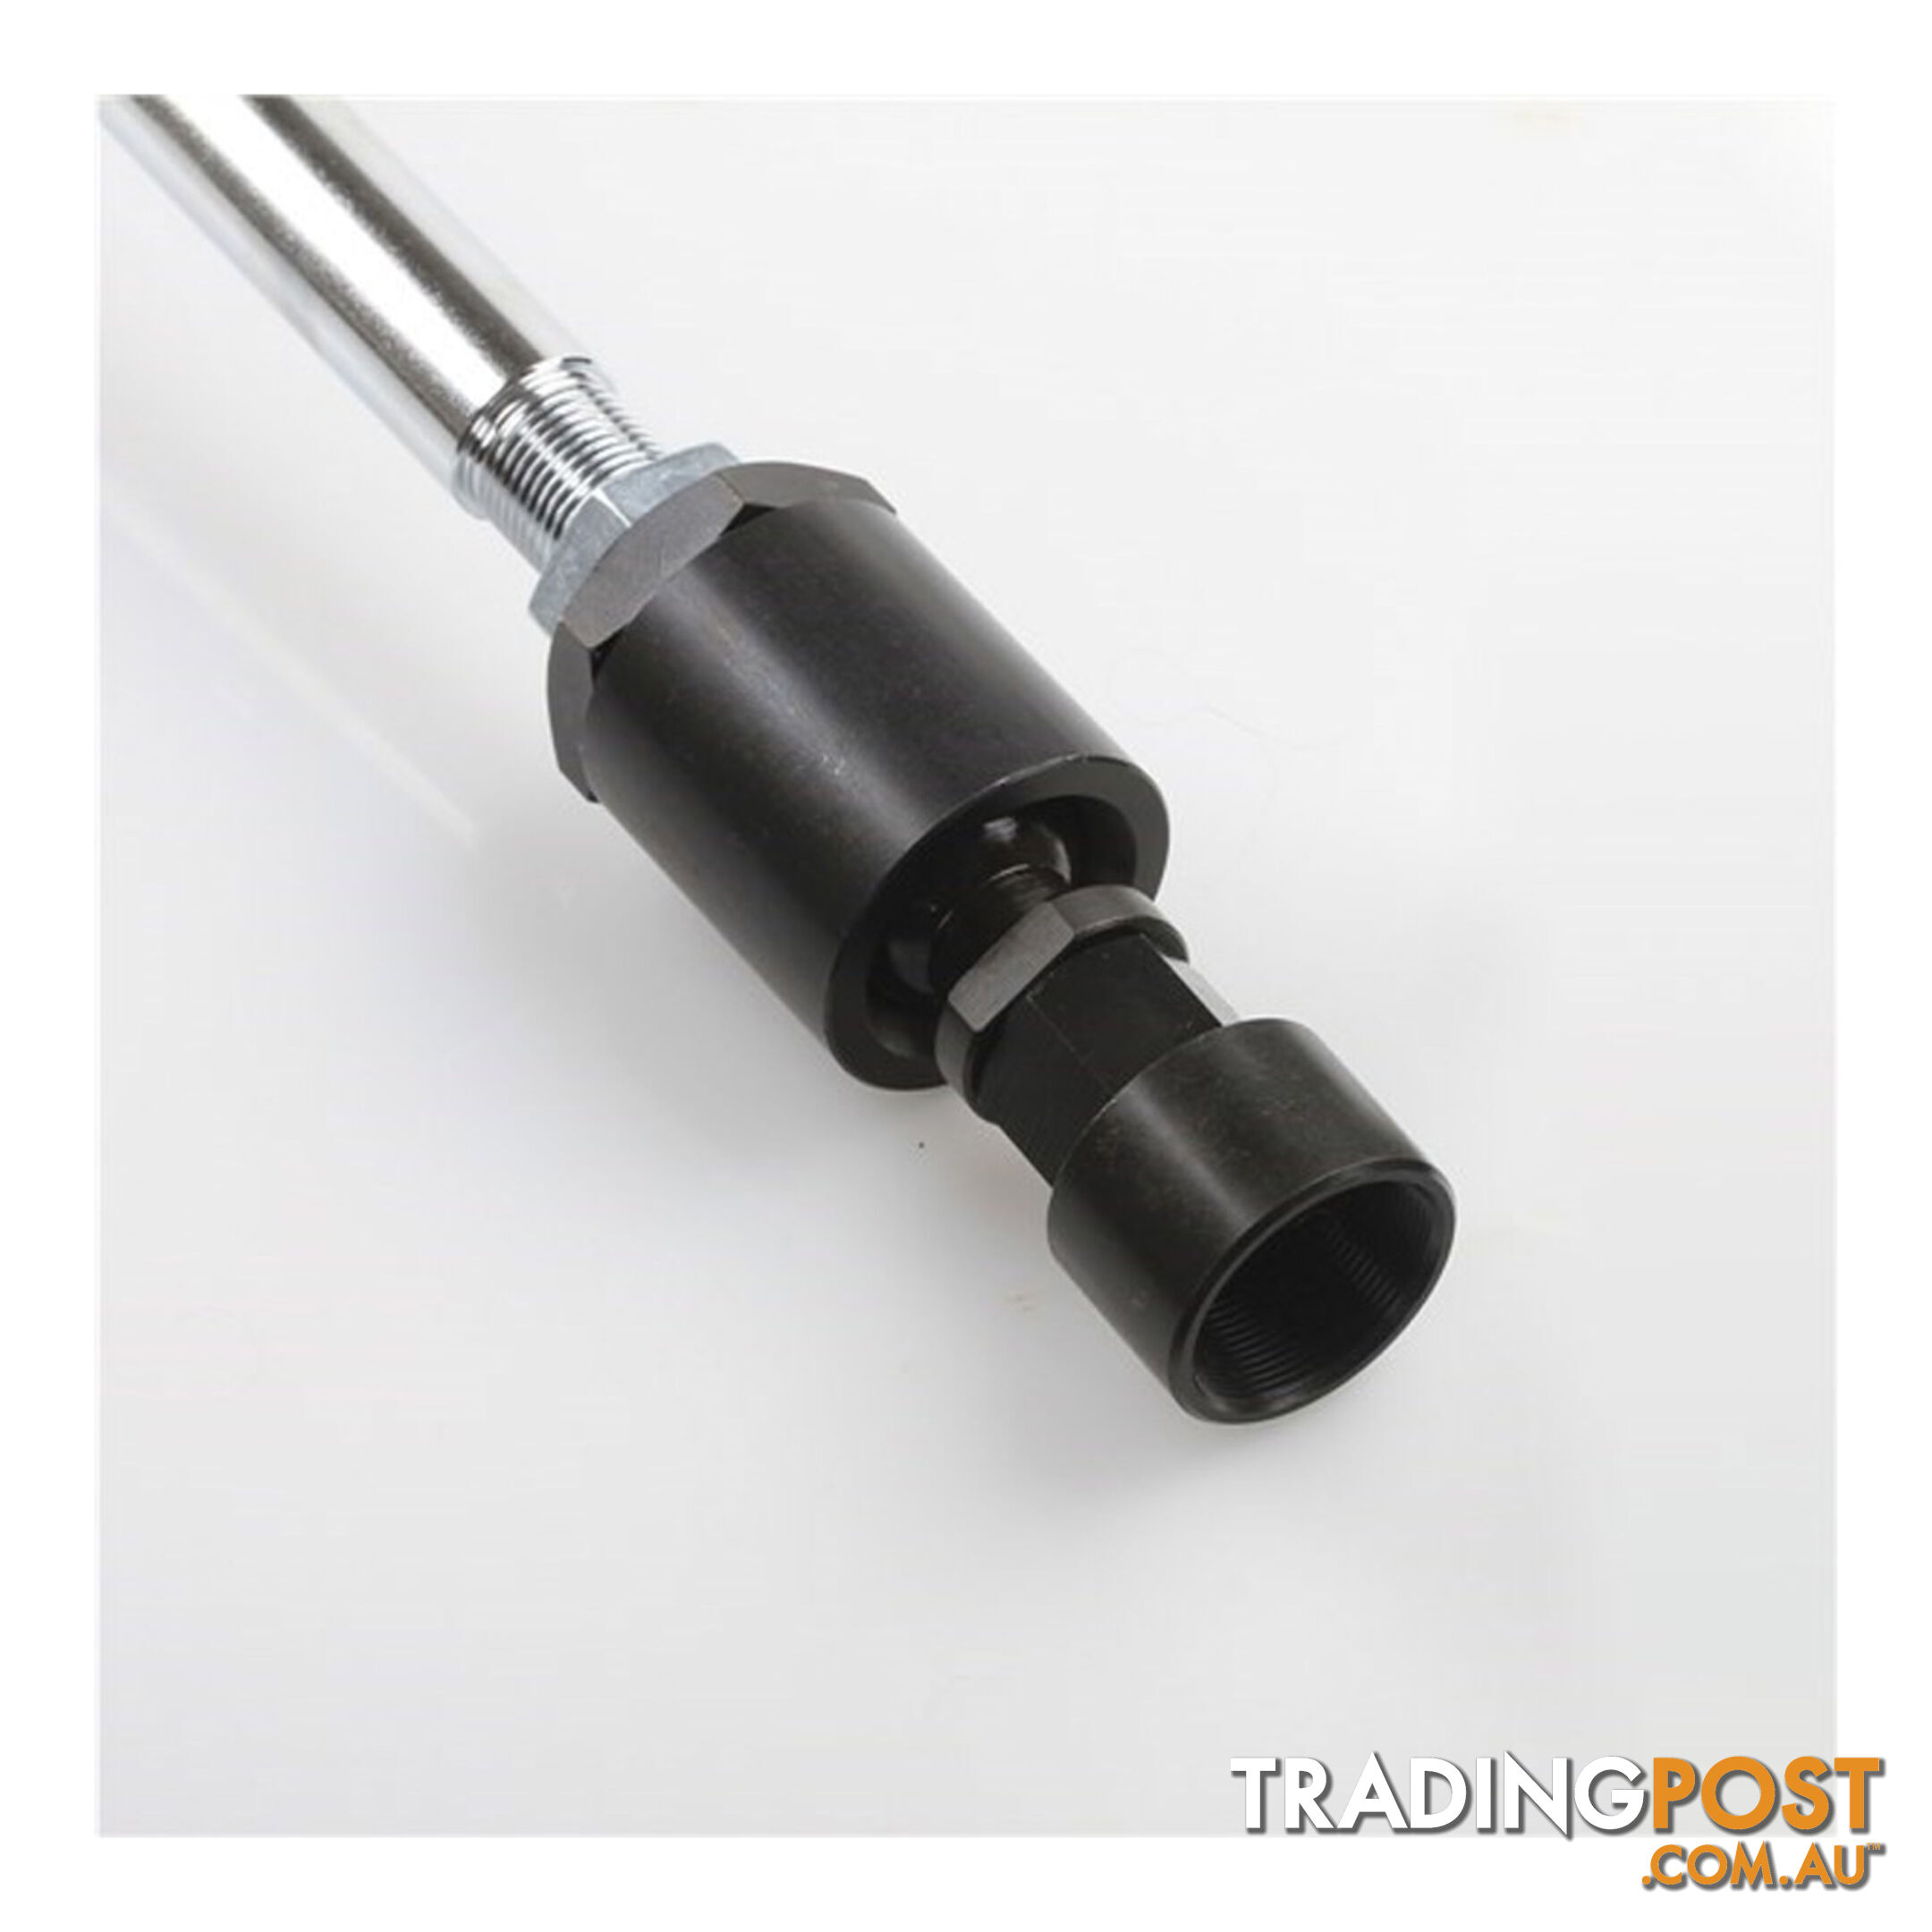 Toledo Diesel Injector Puller Adaptor 21pc Set SKU - 304042A